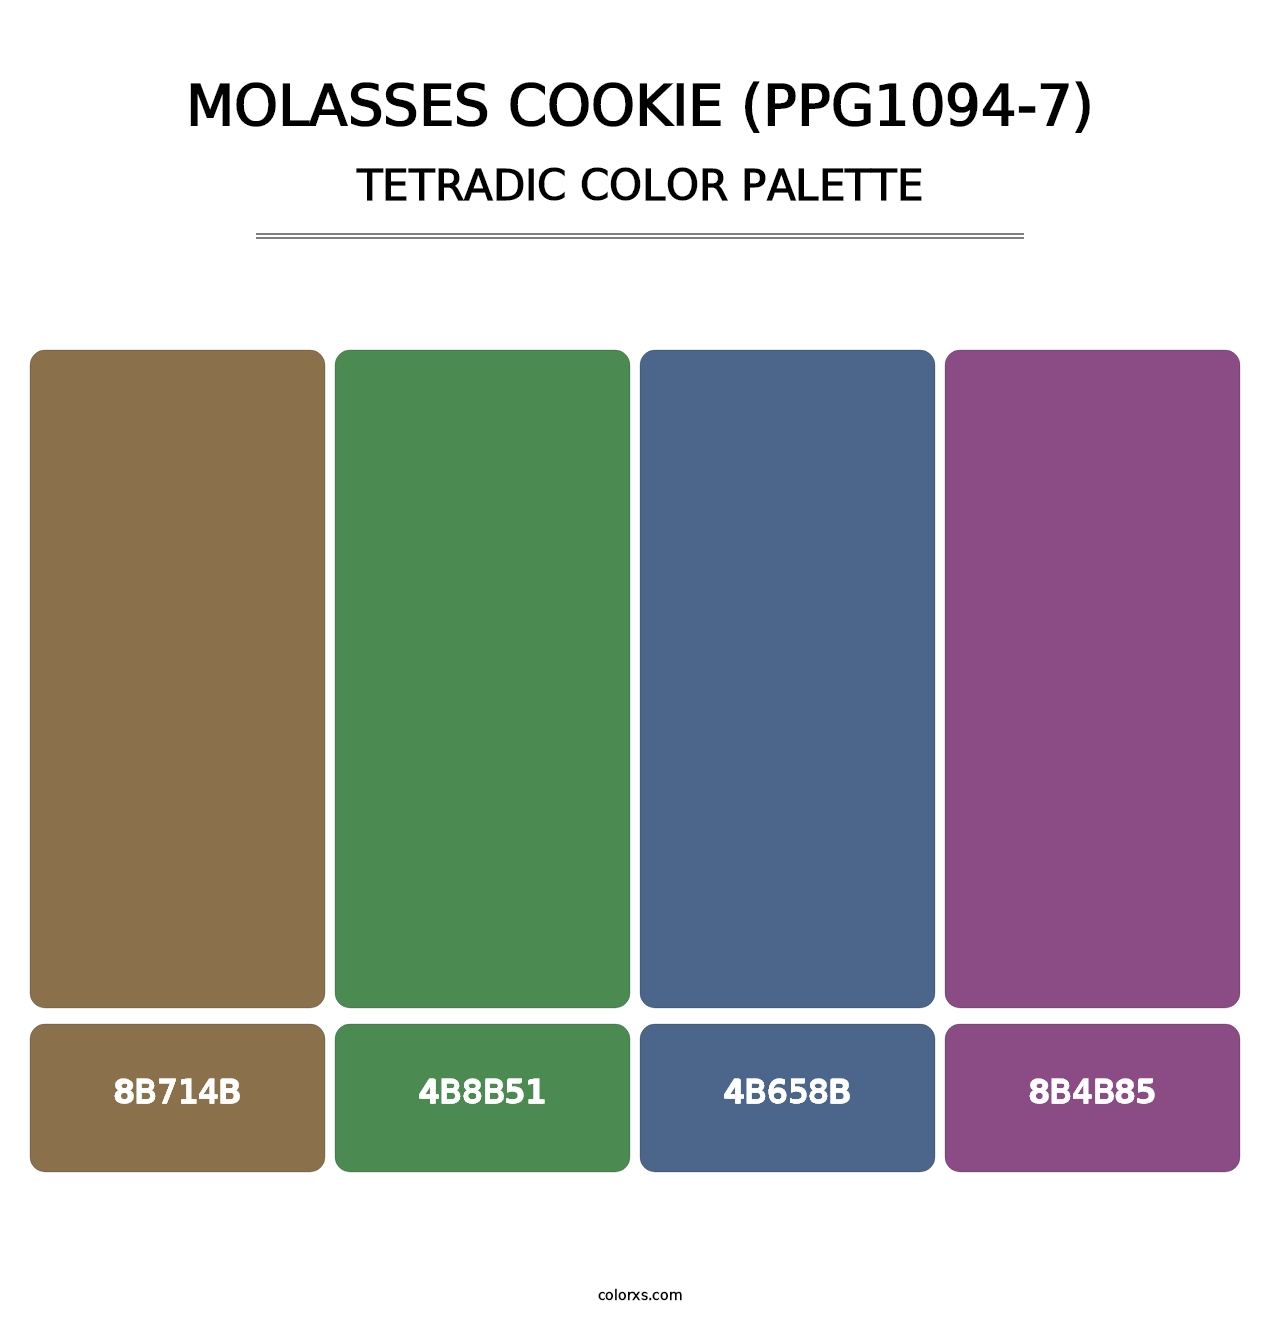 Molasses Cookie (PPG1094-7) - Tetradic Color Palette